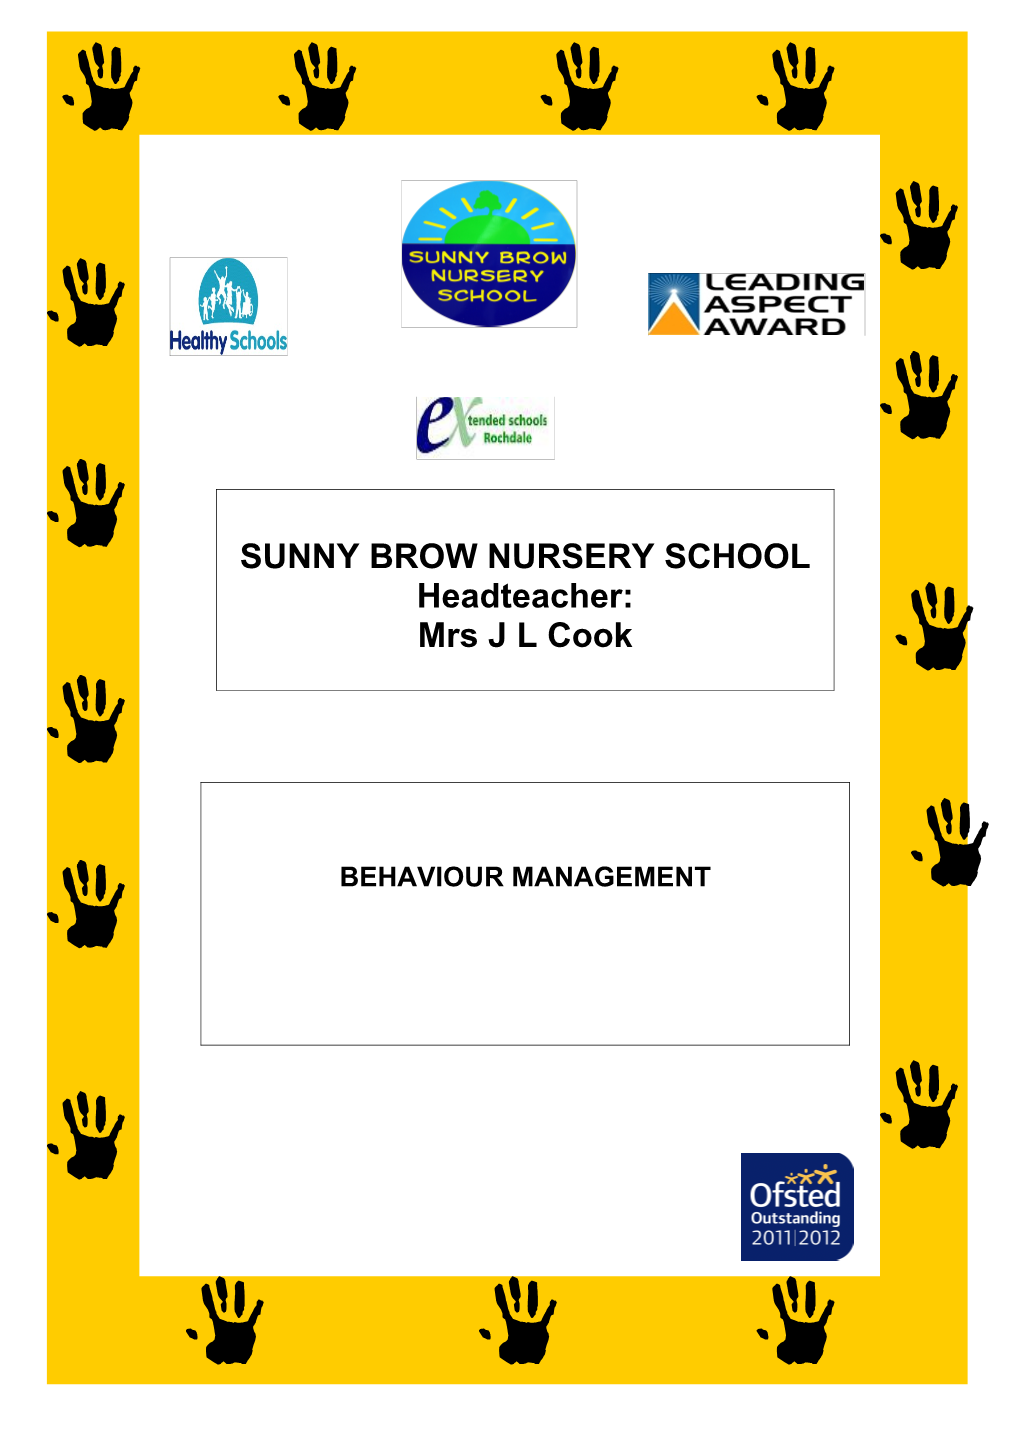 Sunny Brownursery School